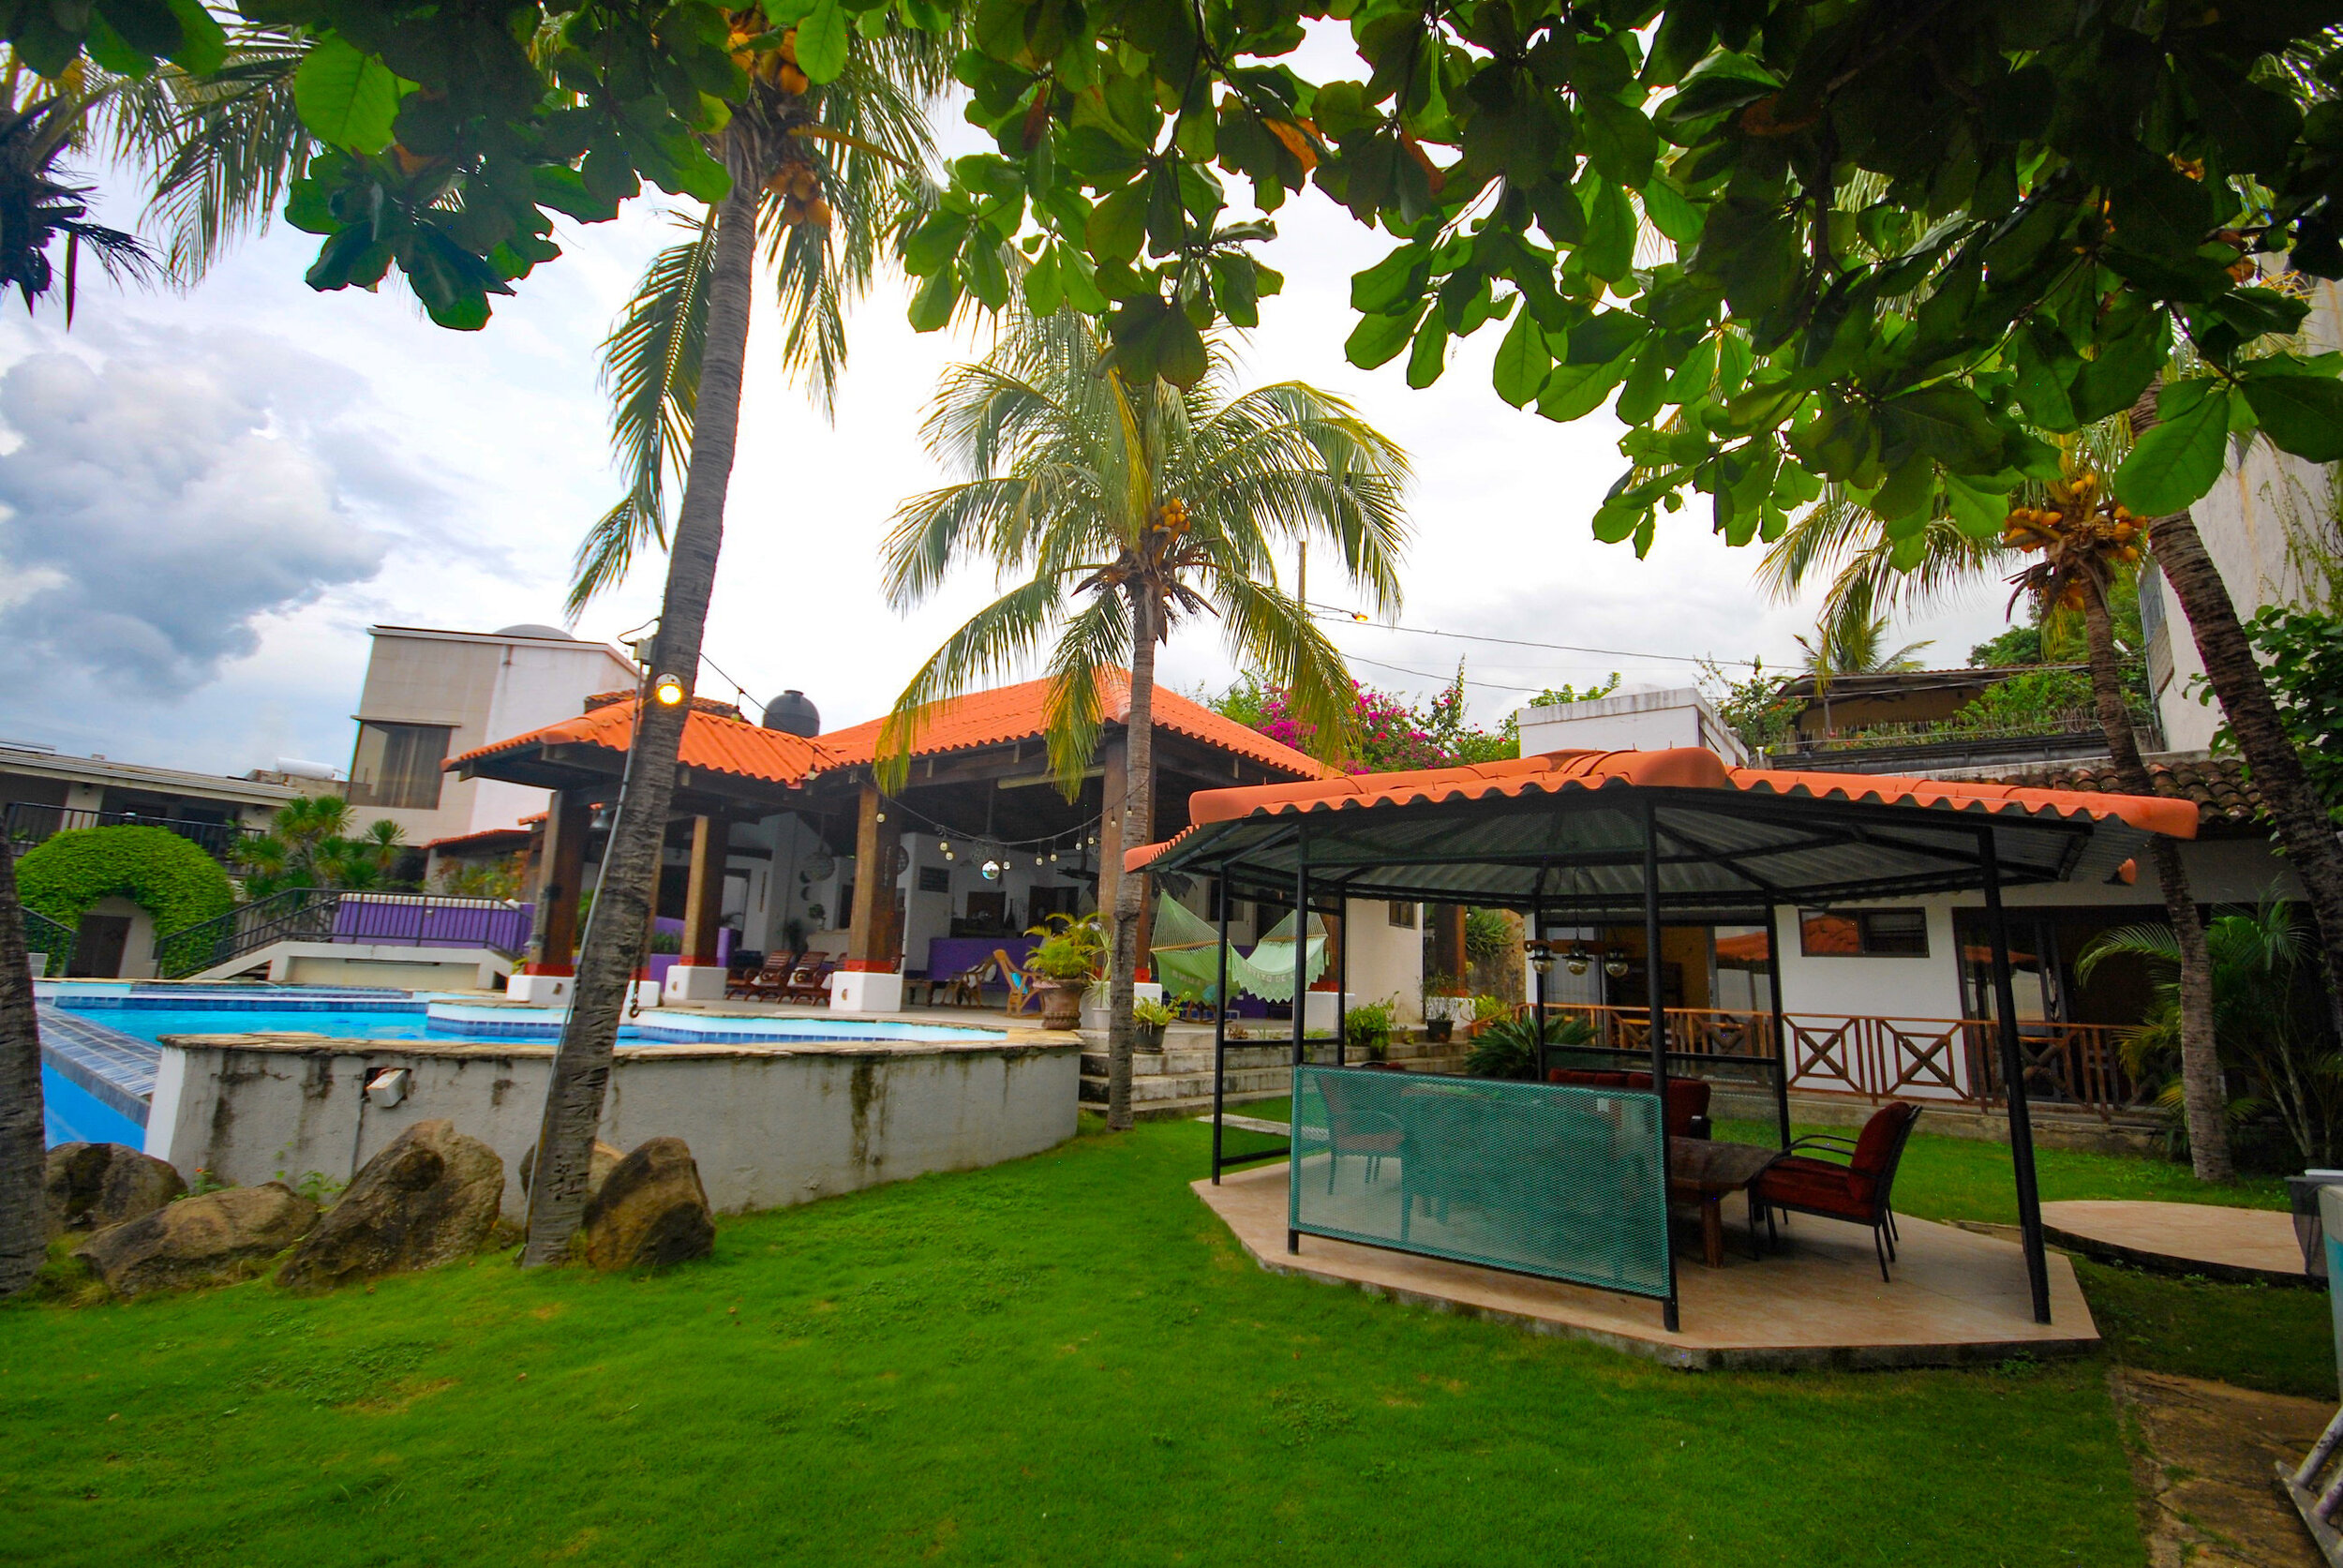 Hotel Resort For Sale San Juan Del Sur Nicaragua 19.JPEG